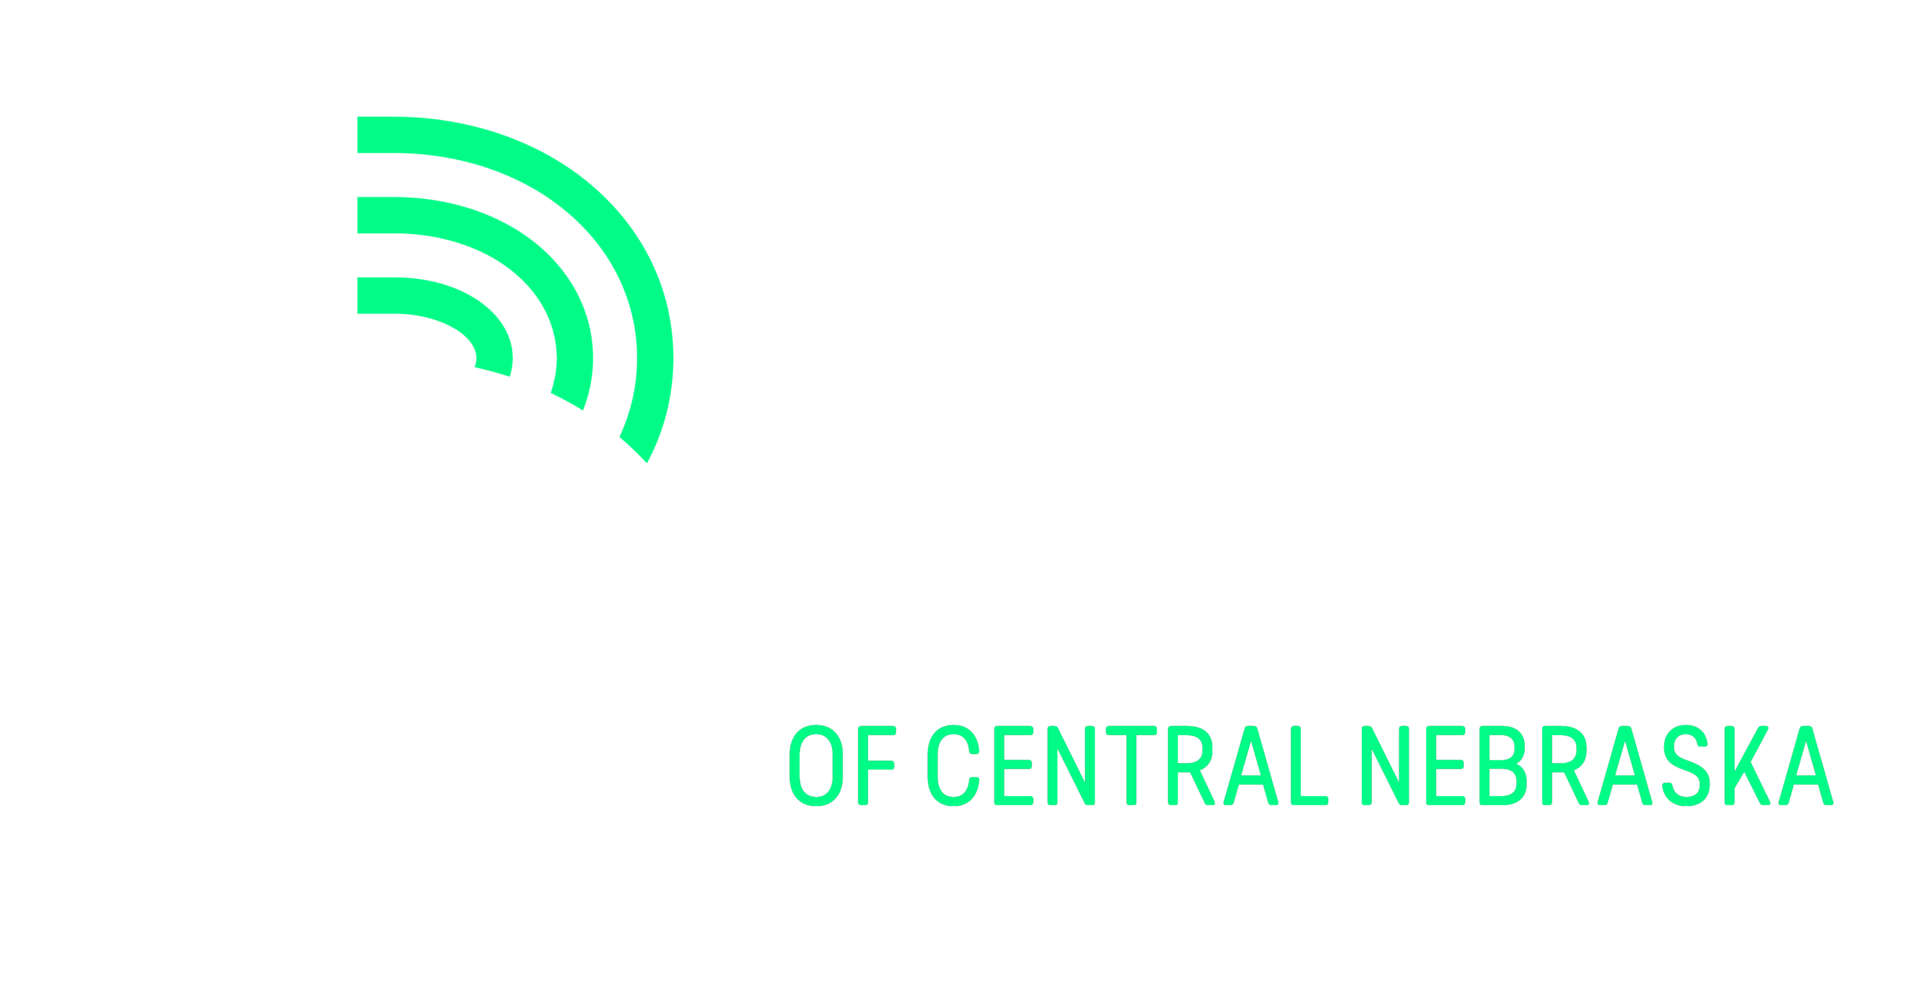 Big Brothers Big Sisters of Central Nebraska